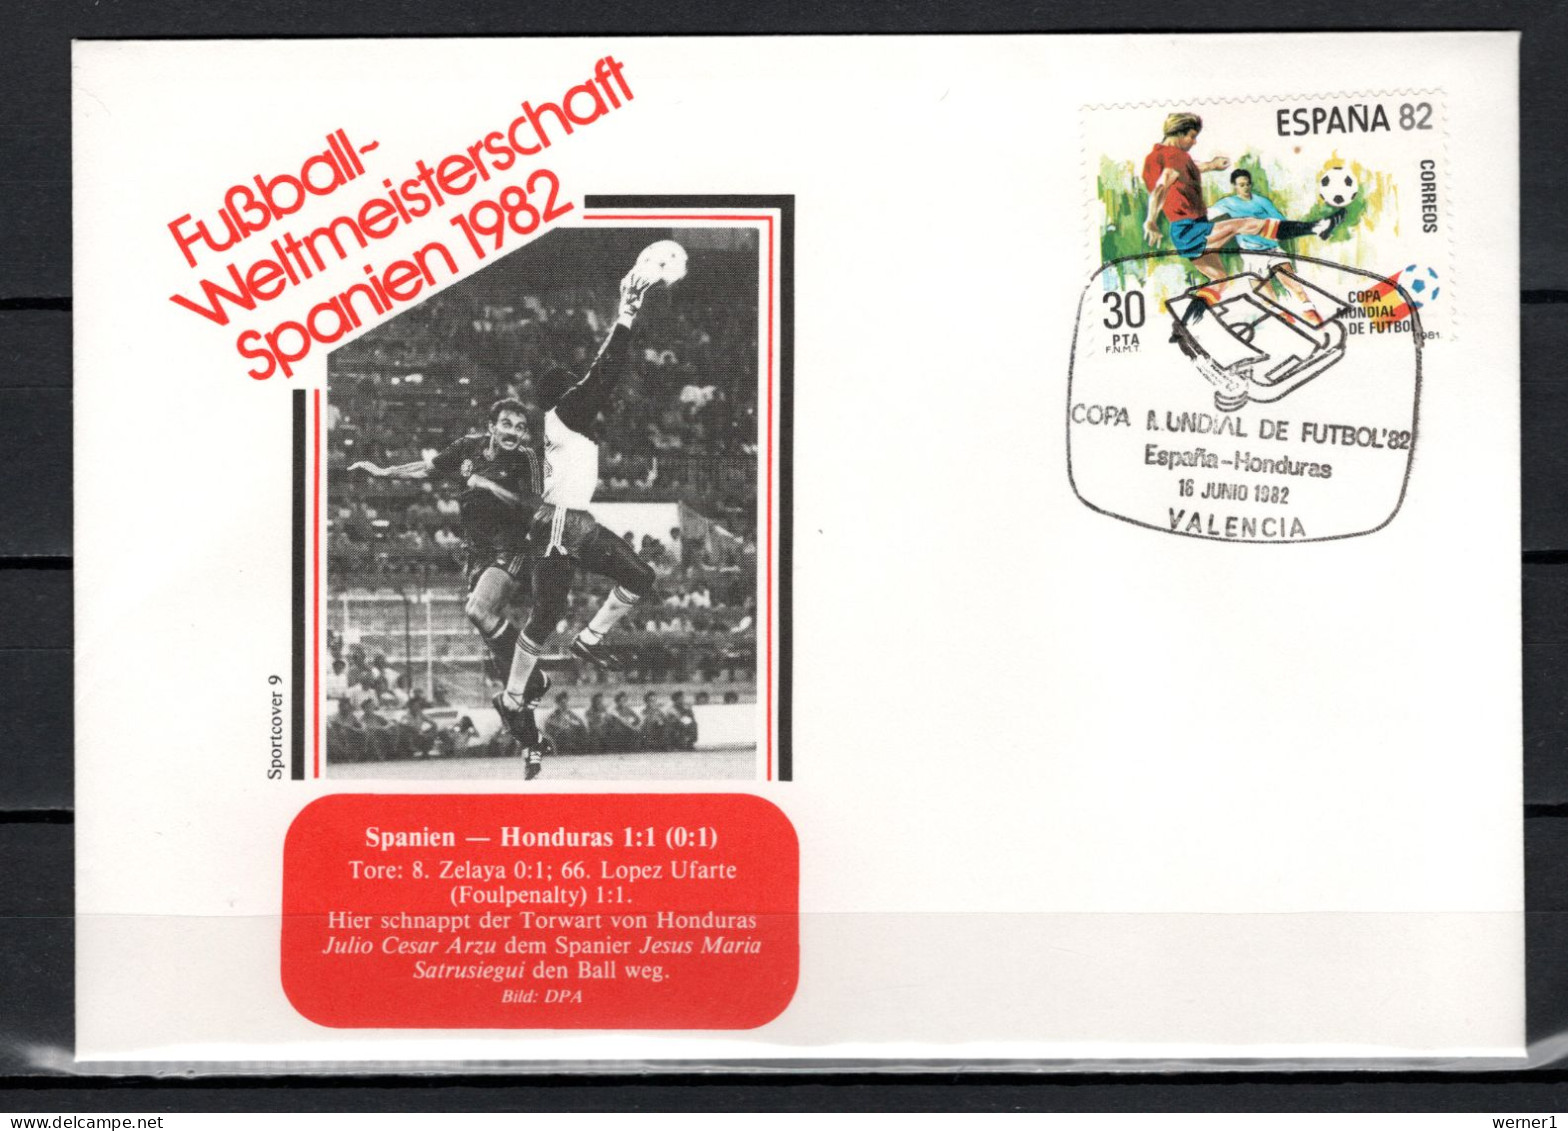 Spain 1982 Football Soccer World Cup Commemorative Cover Match Spain - Honduras 1:1 - 1982 – Spain